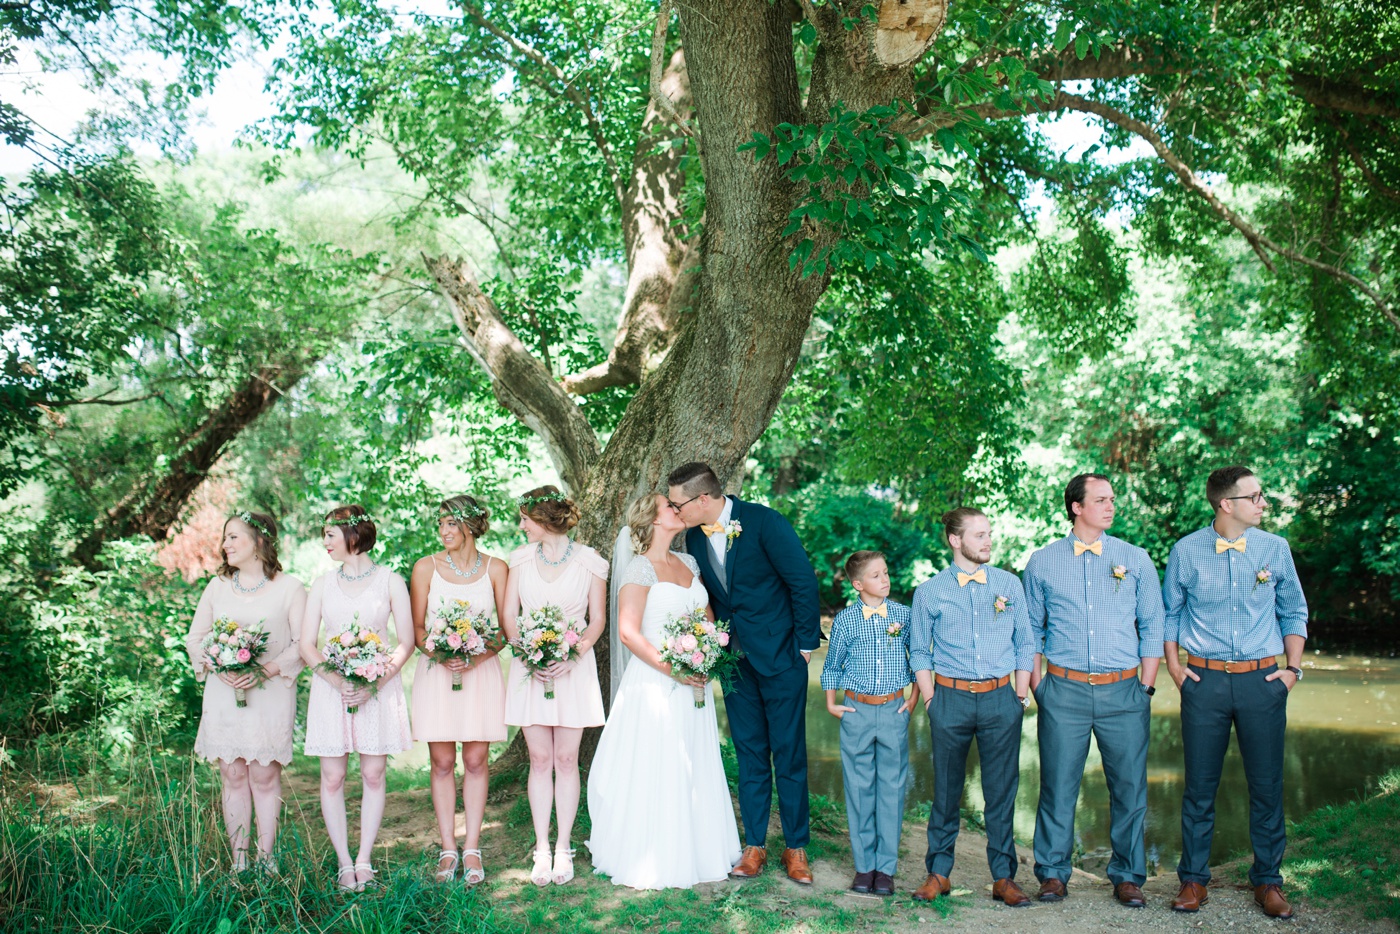 Kristen + John - Reading Pennsylvania Wedding Photographer - Alison Dunn Photography photo-62